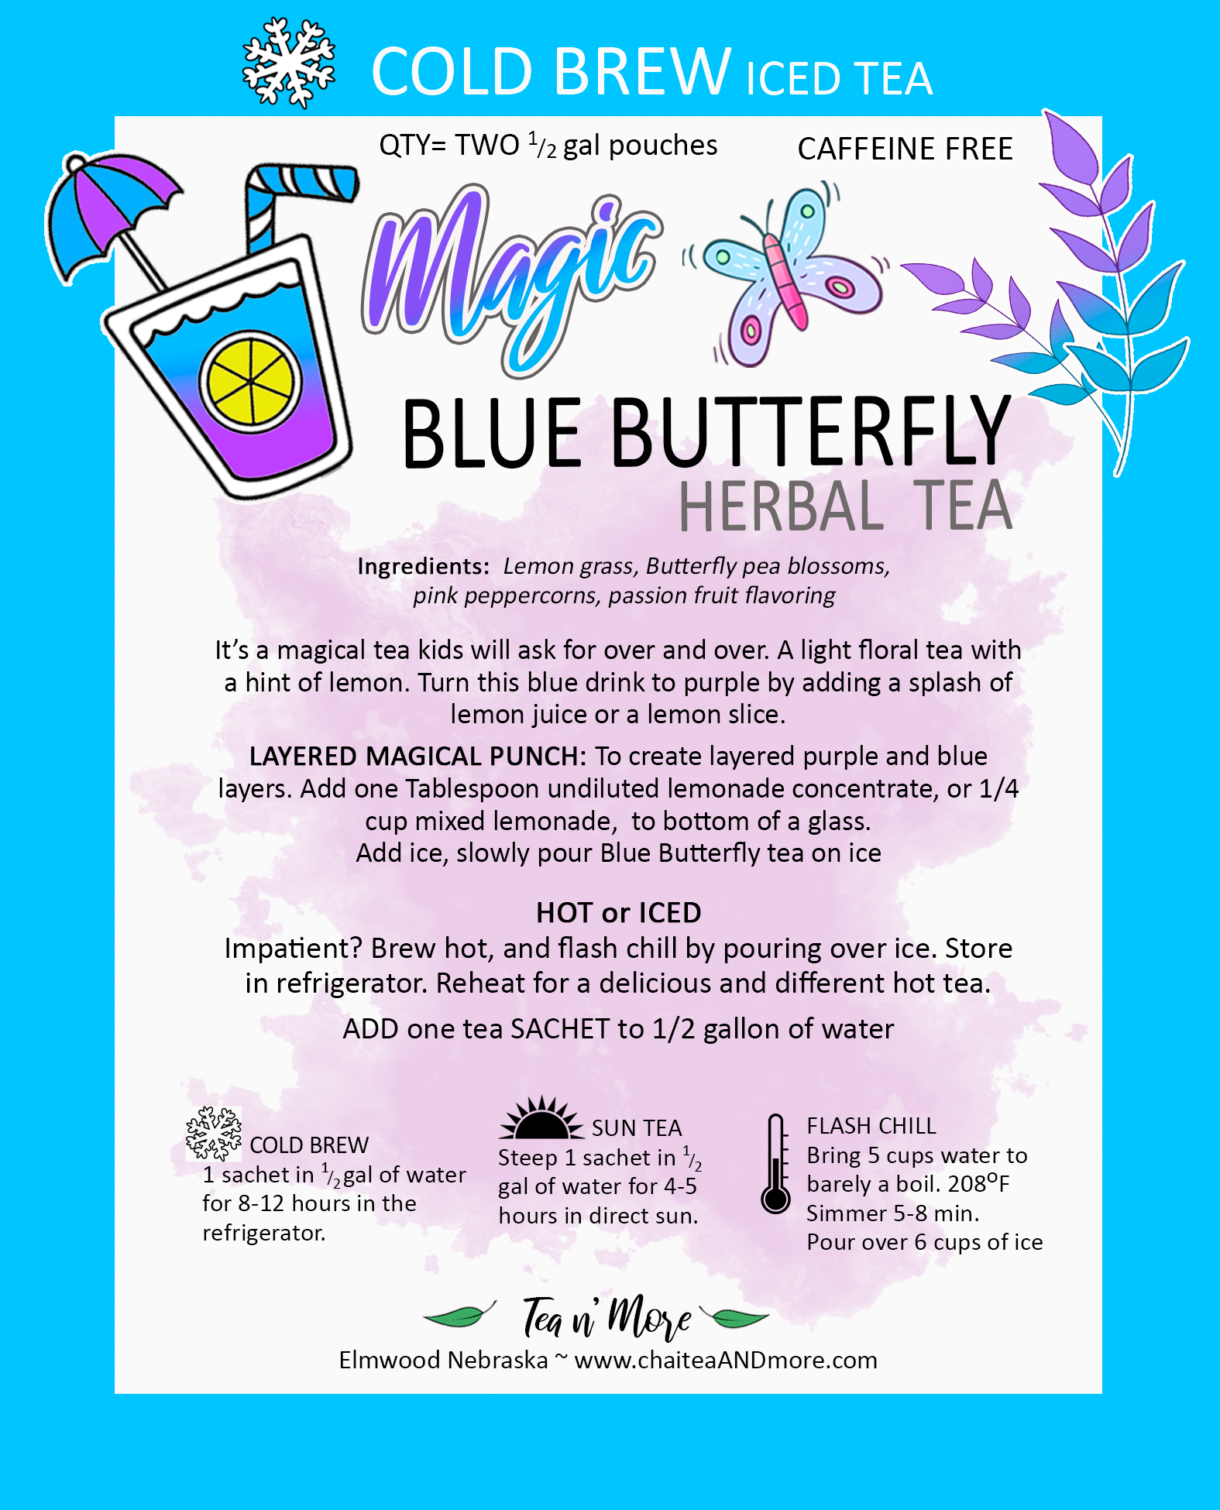 Blue Butterfly pea flower tea is delicious as an ice tea